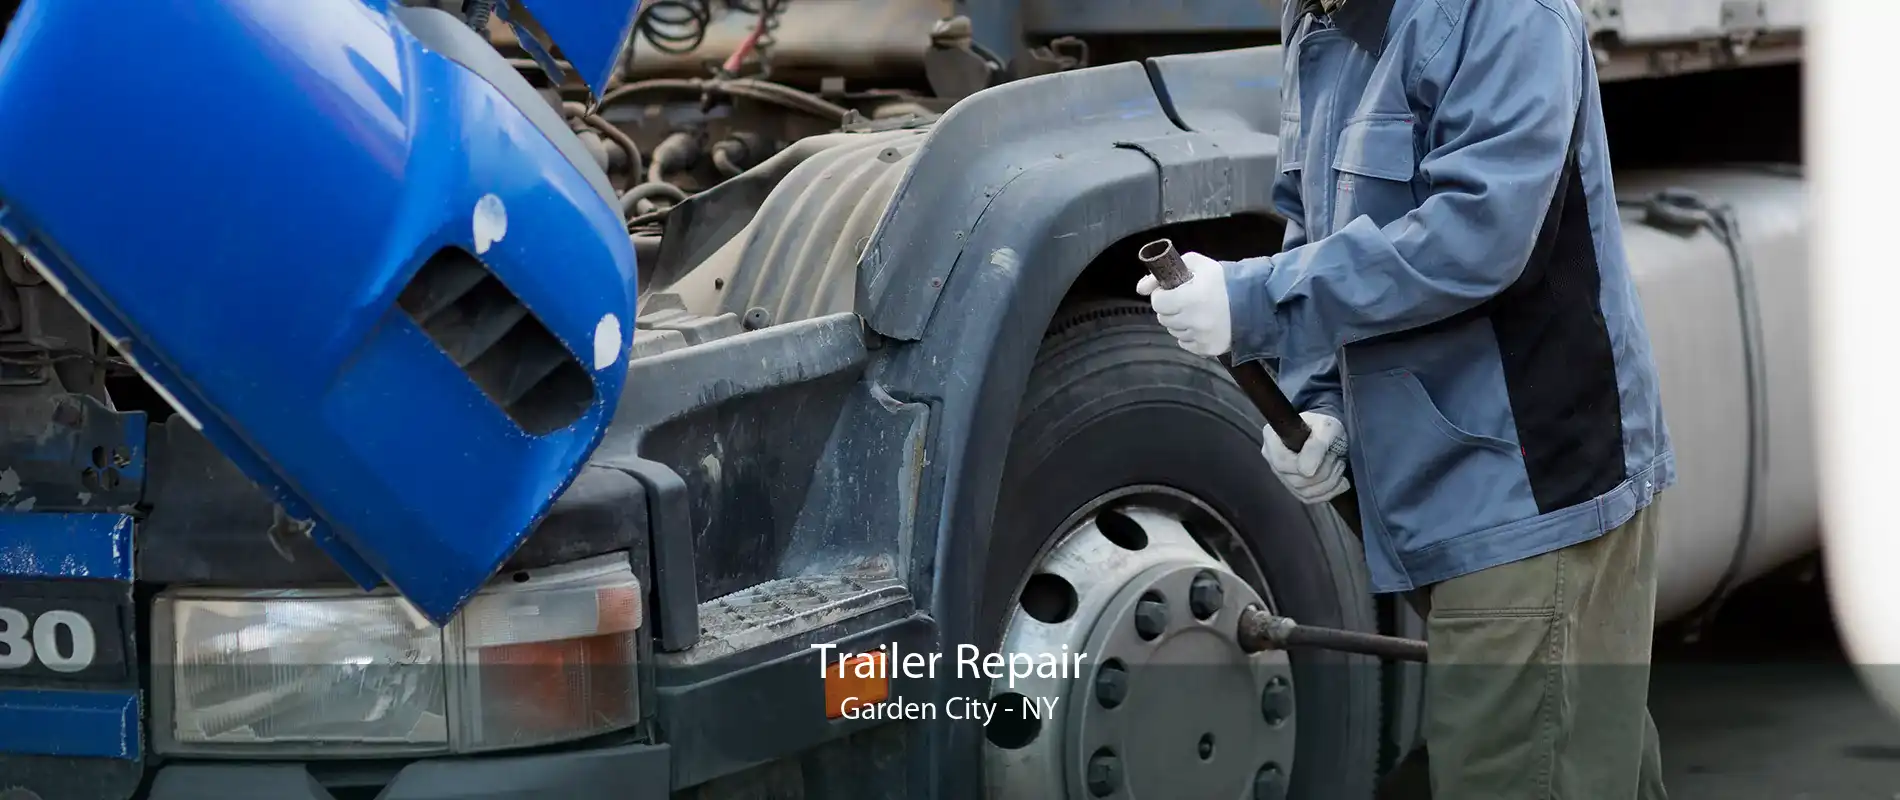 Trailer Repair Garden City - NY